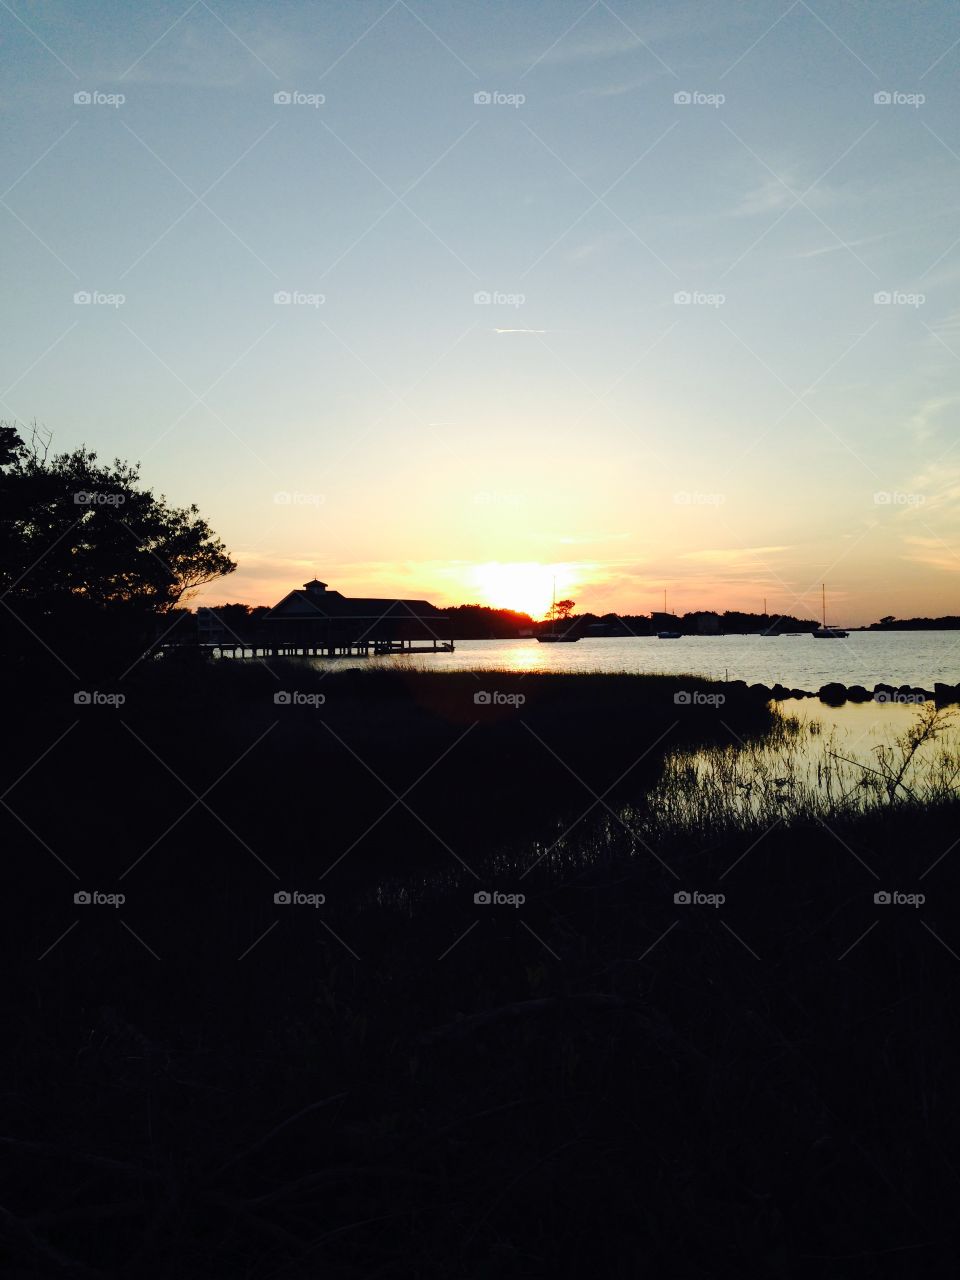 Ocracoke sunset